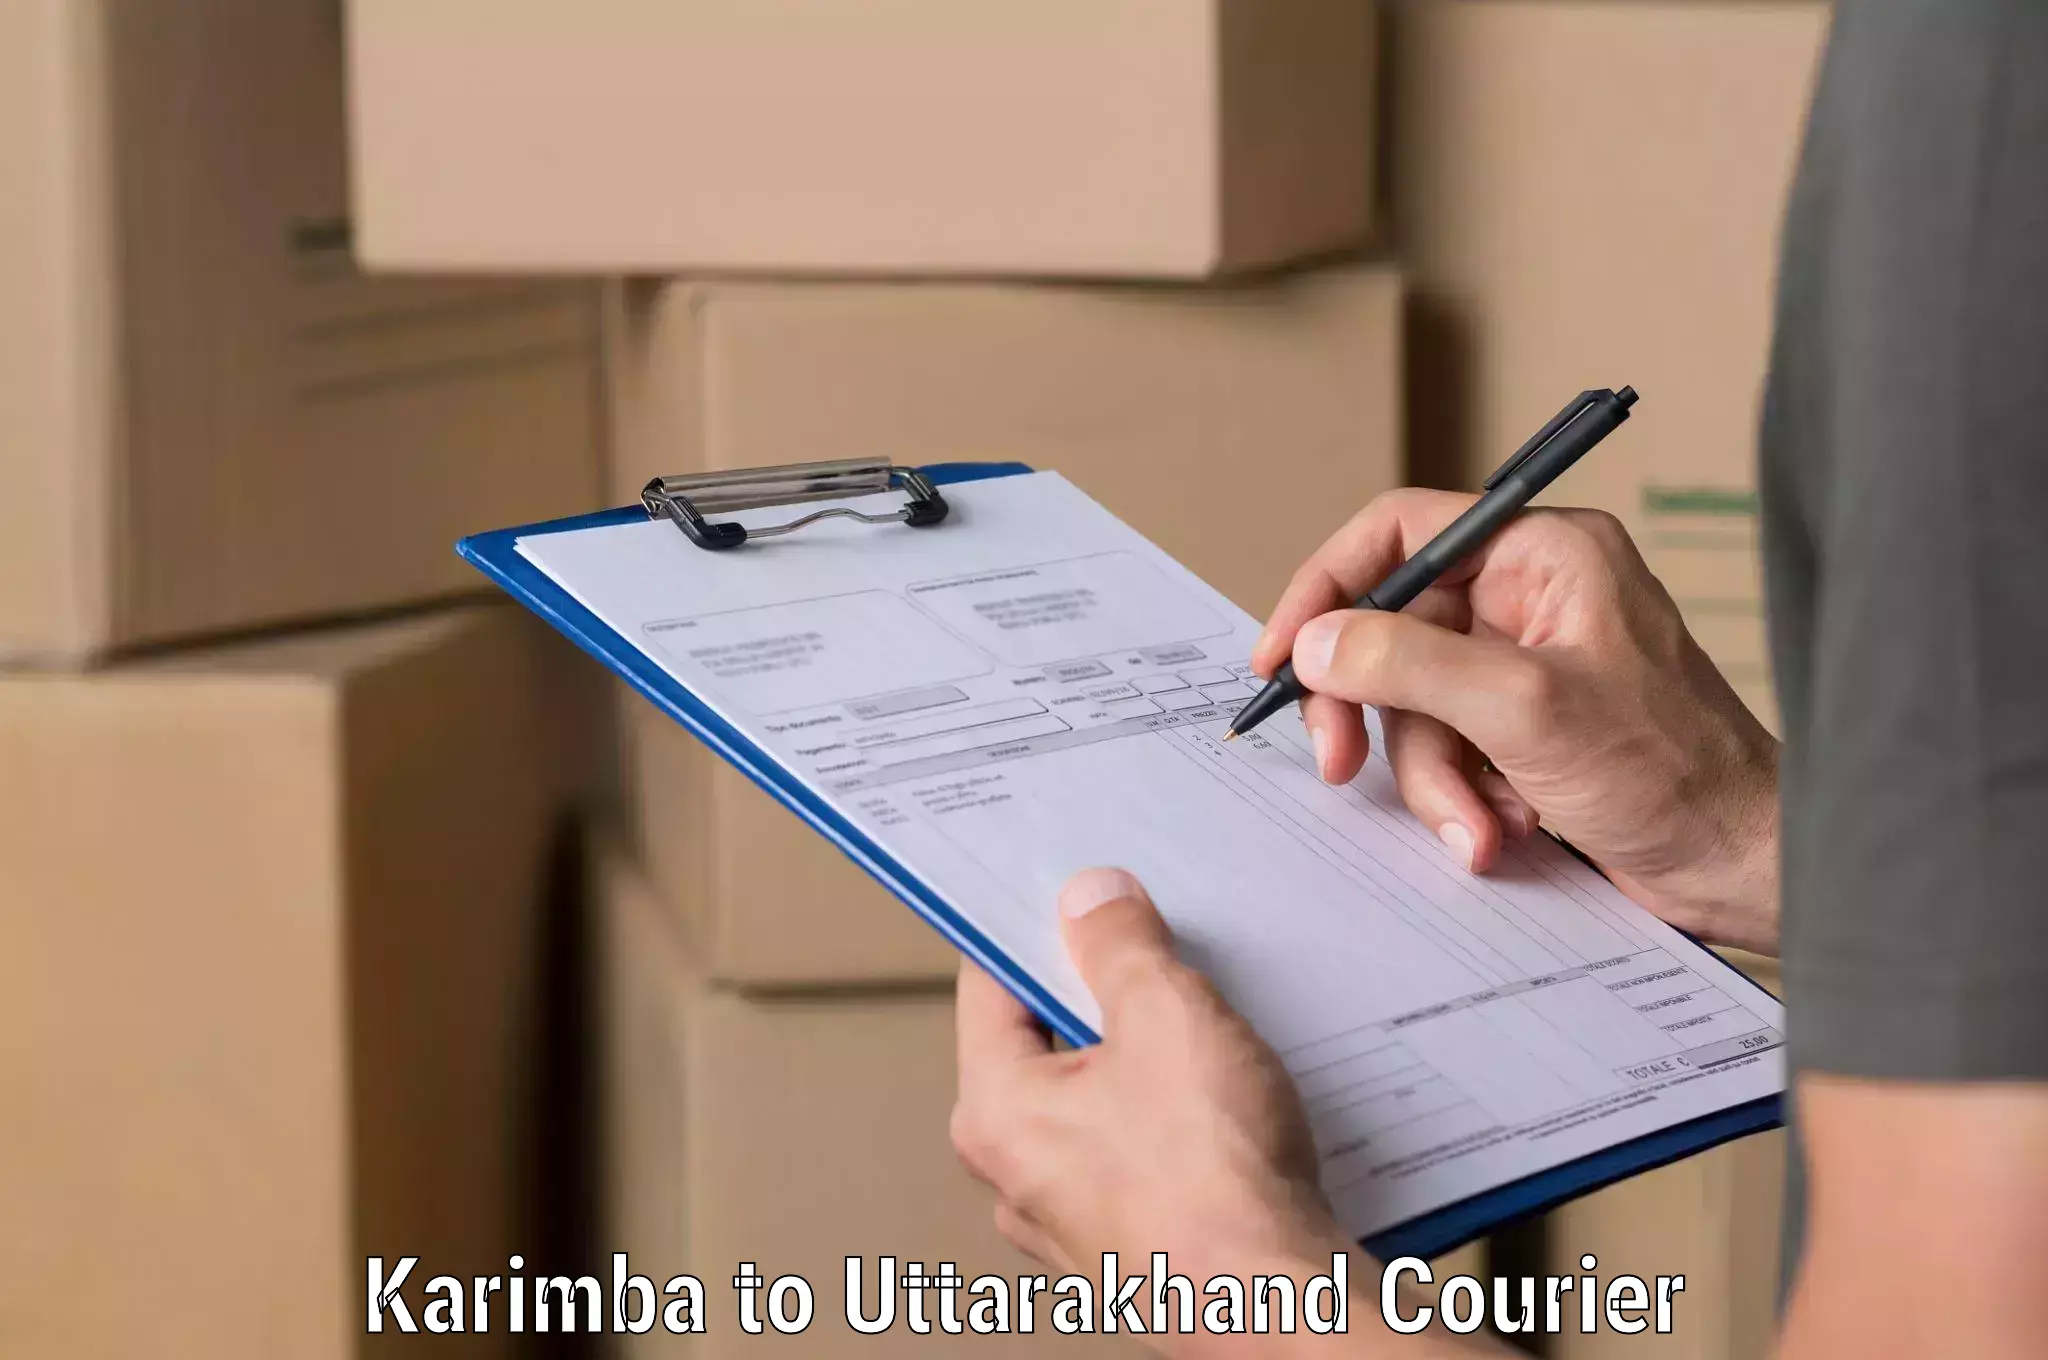 Bulk courier orders Karimba to Kashipur